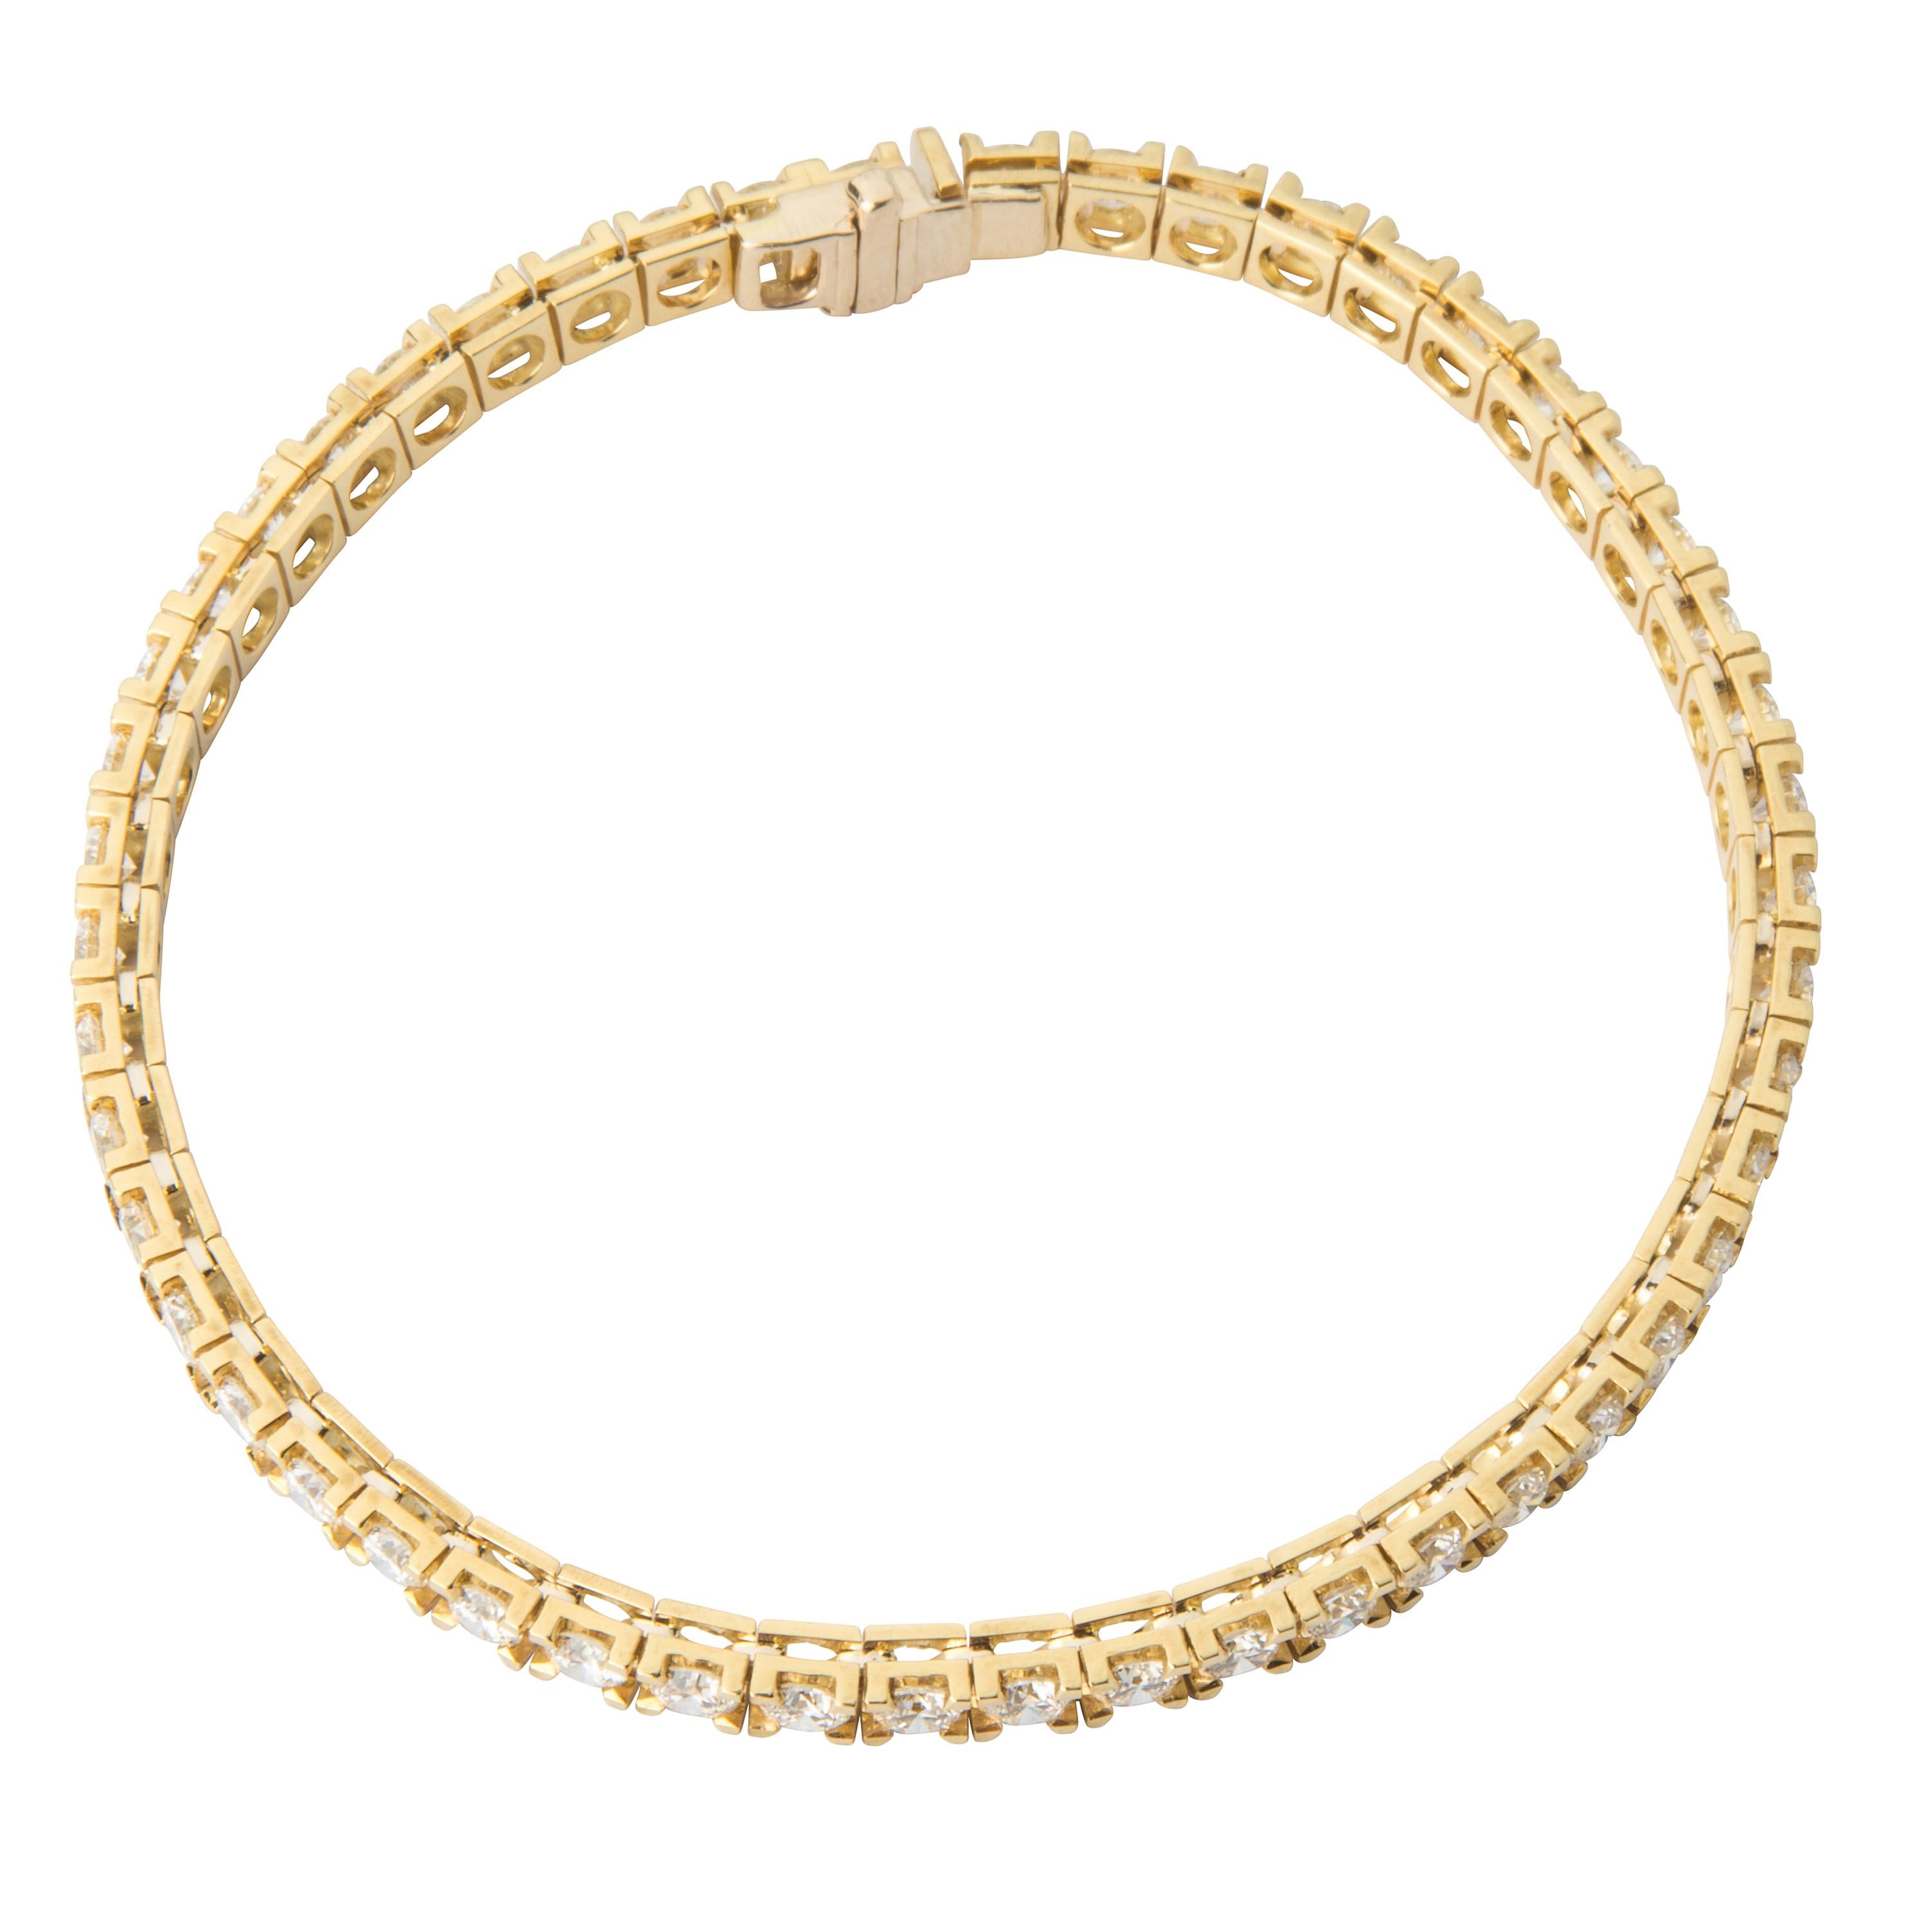 18 karat yellow gold tennis bracelet featuring 50 round brilliant cut diamonds totalling 5.00ct.